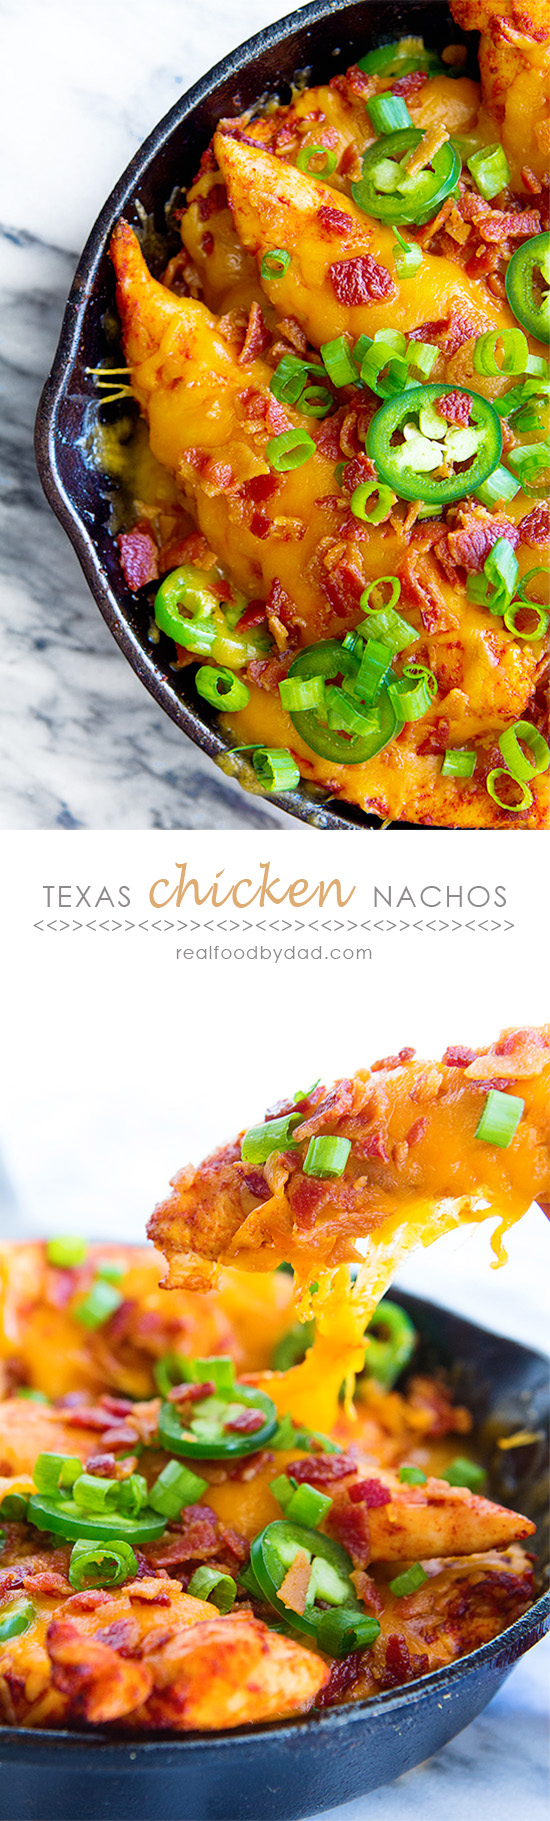 Texas Chicken Nachos _ Real Food by Dad